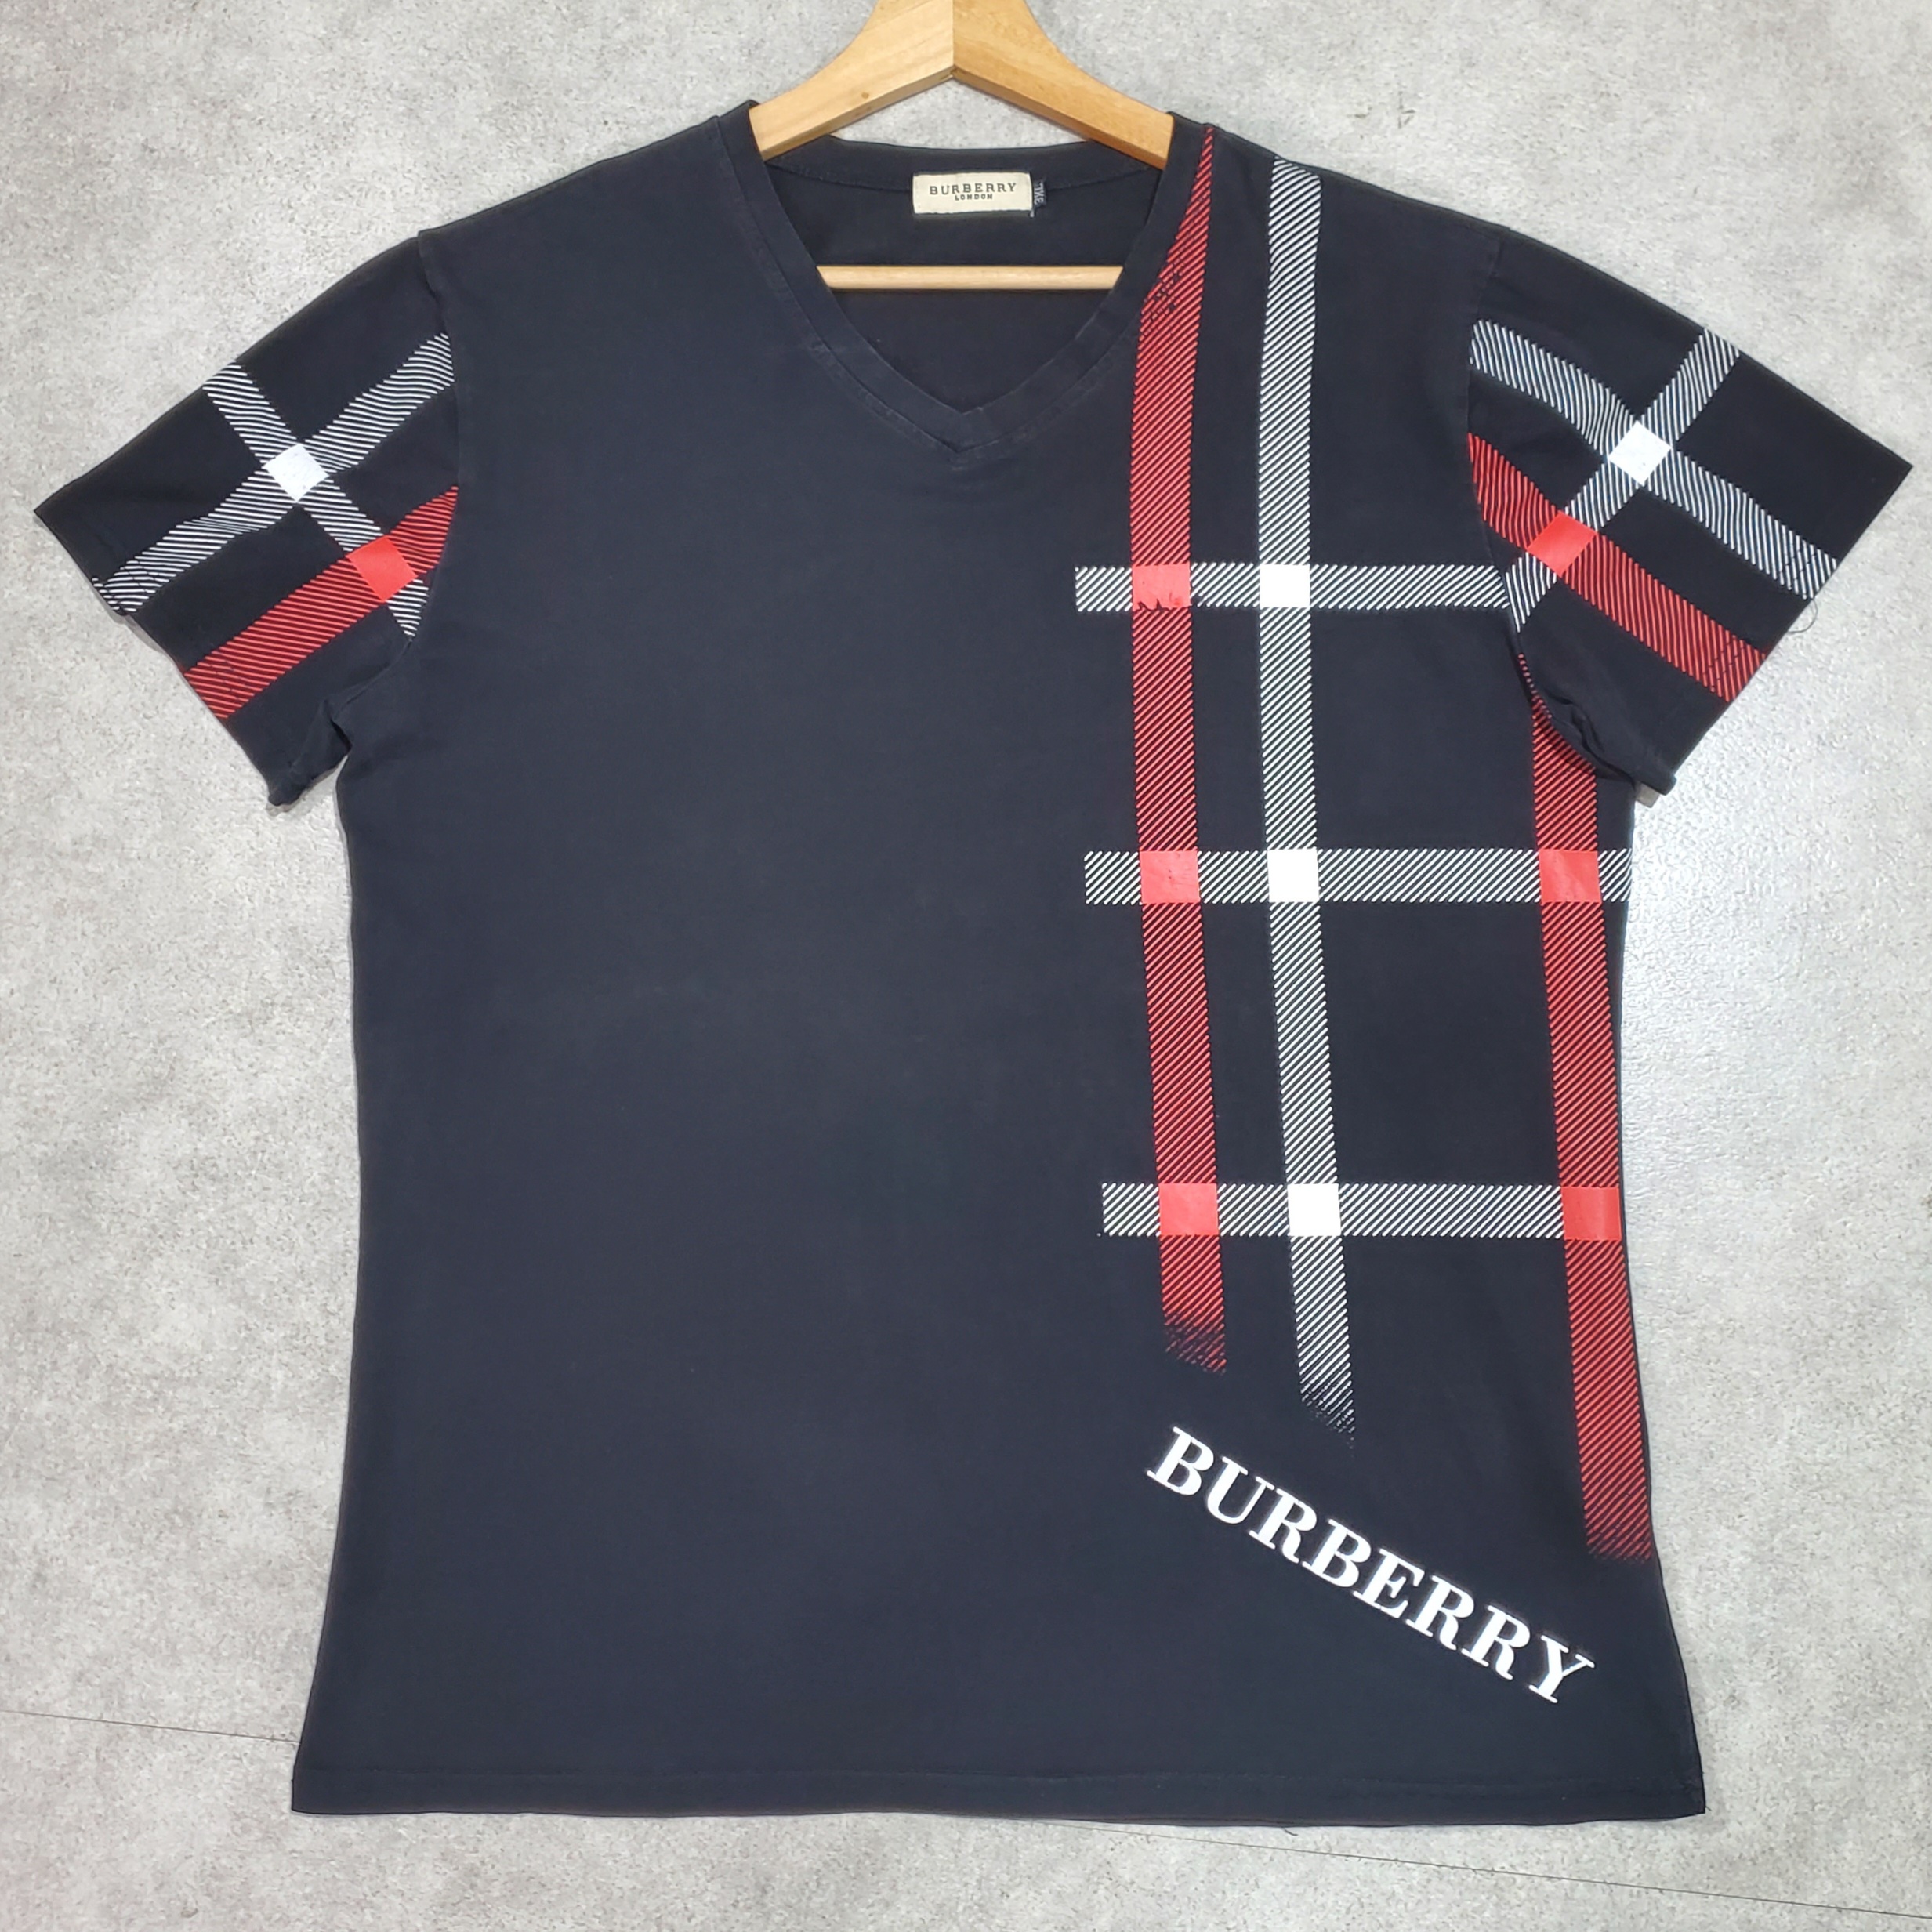 Burberry Londonバーバリーロンドンビッグサイズロゴティーシャツ 黒 